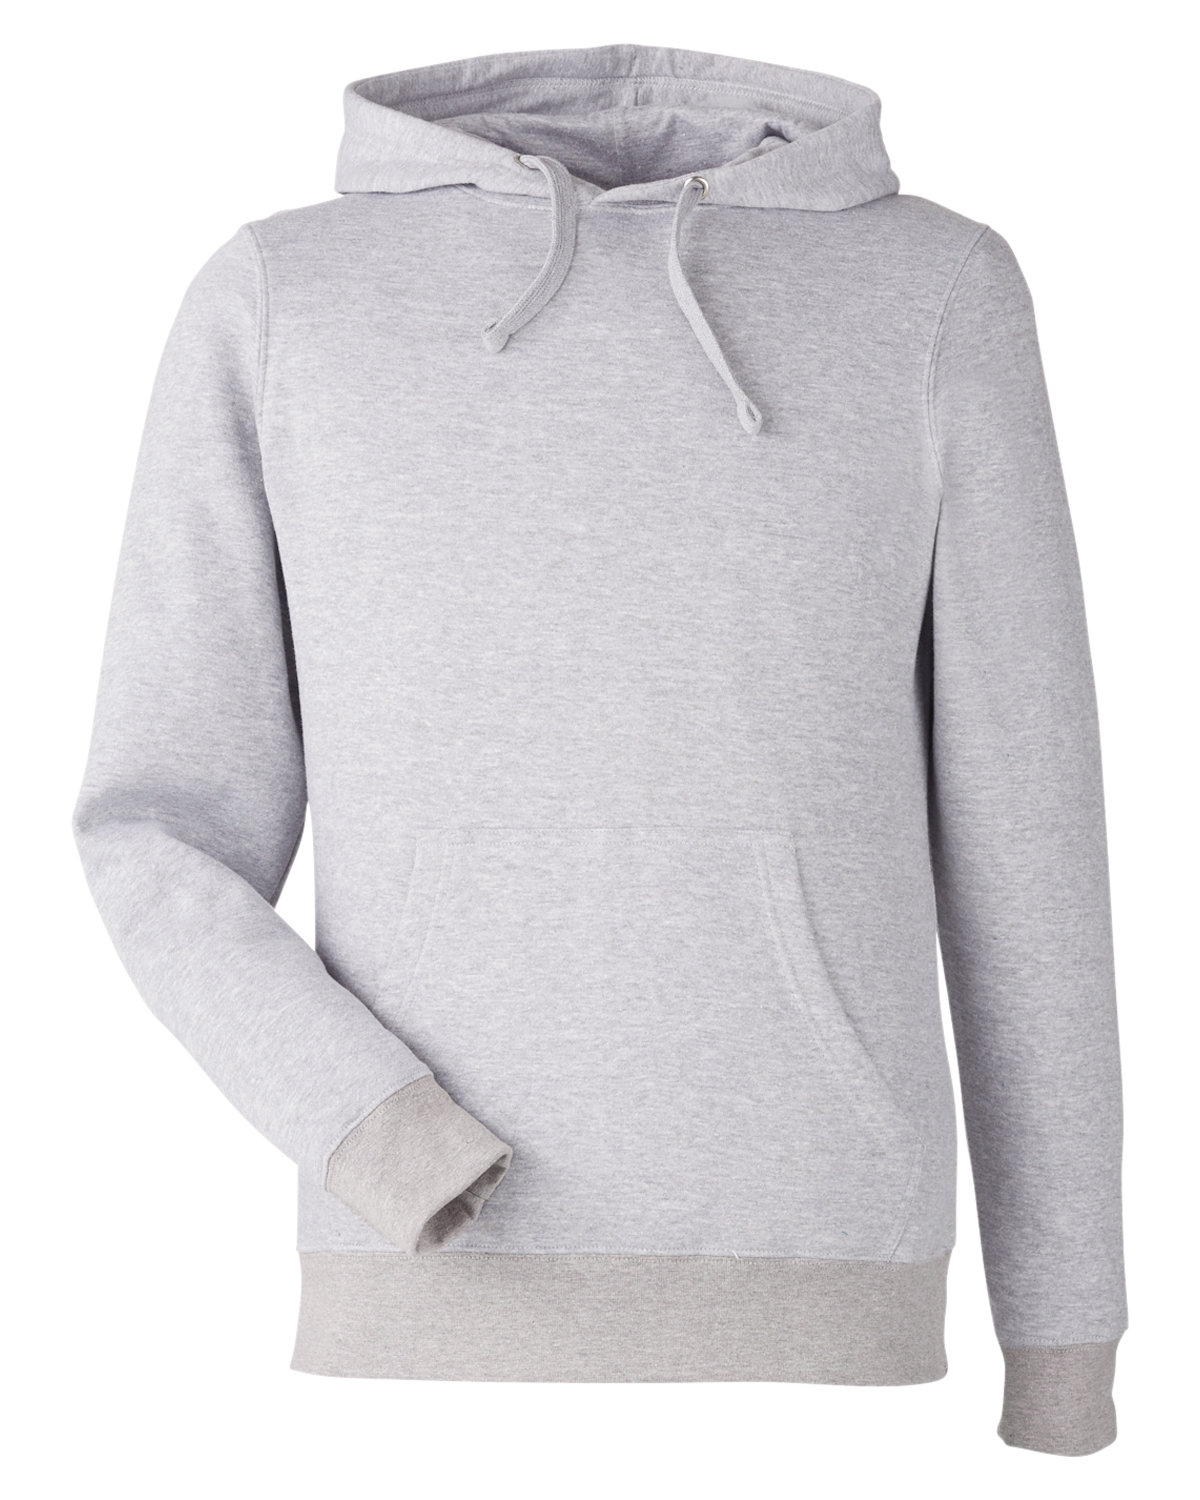 J. America 8720 - Unisex BTB Fleece Hooded Sweatshirt